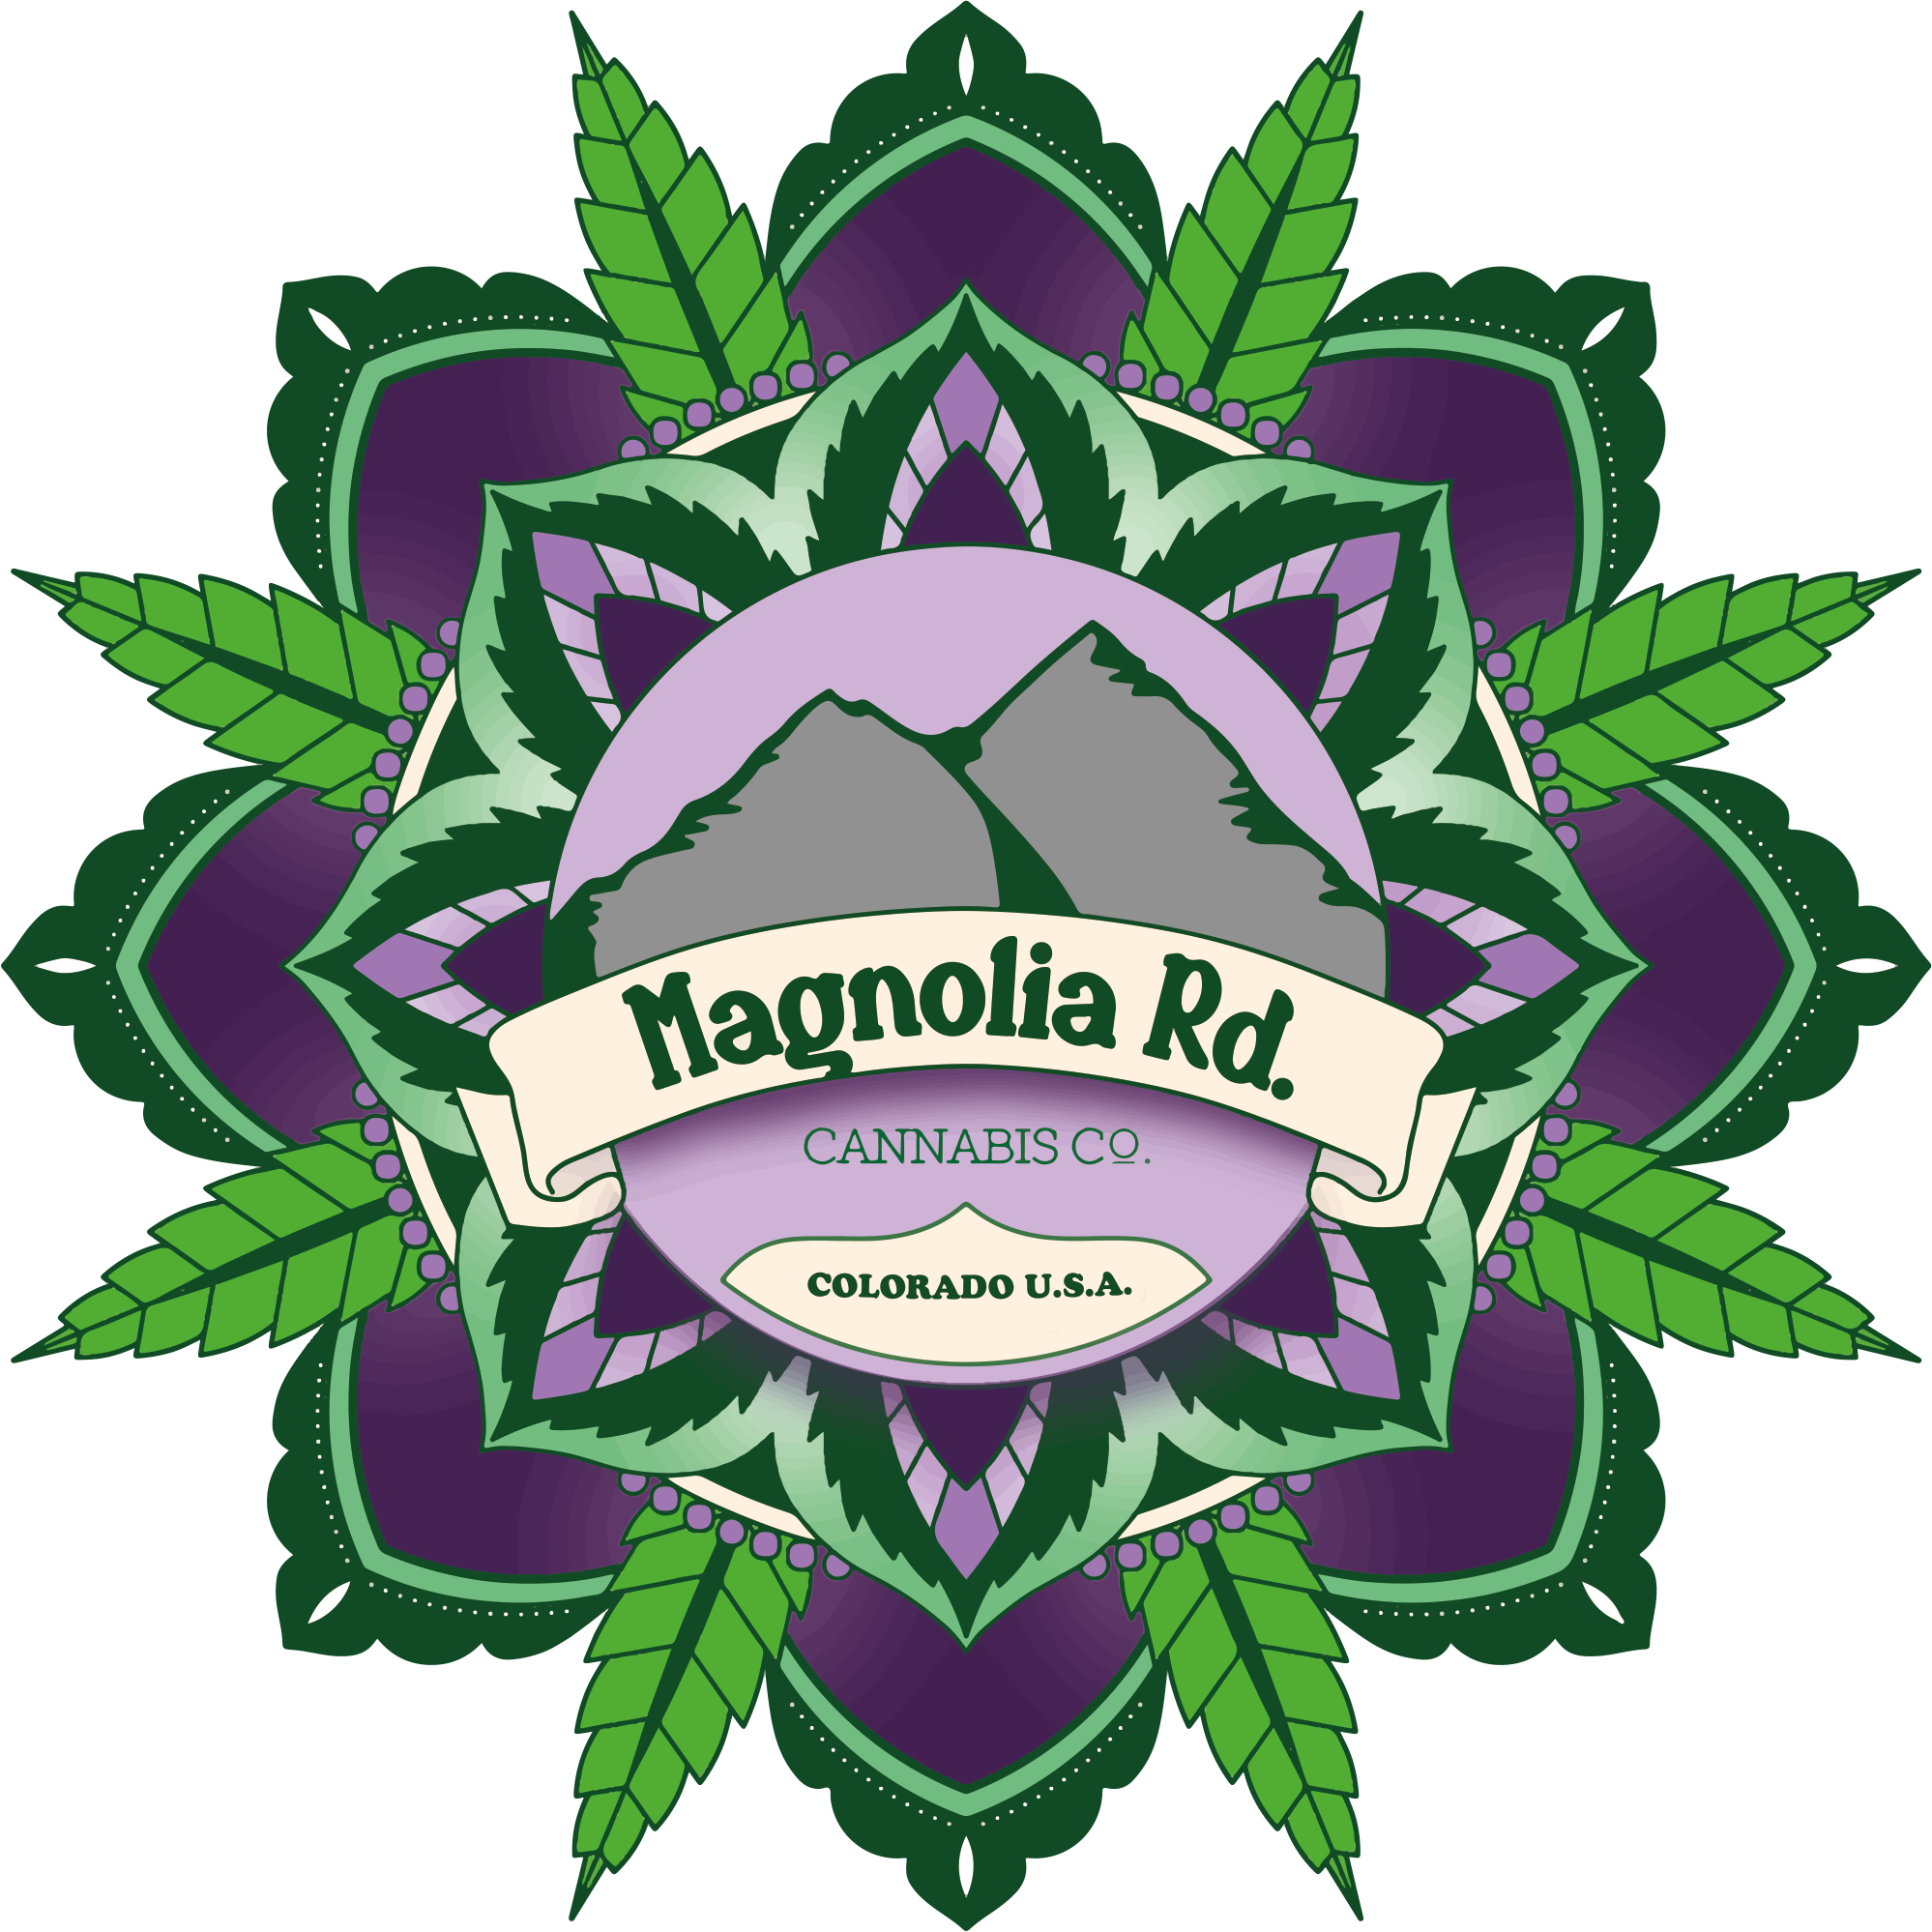 Magnolia Road Cannabis Co. - Log Lane Village-logo